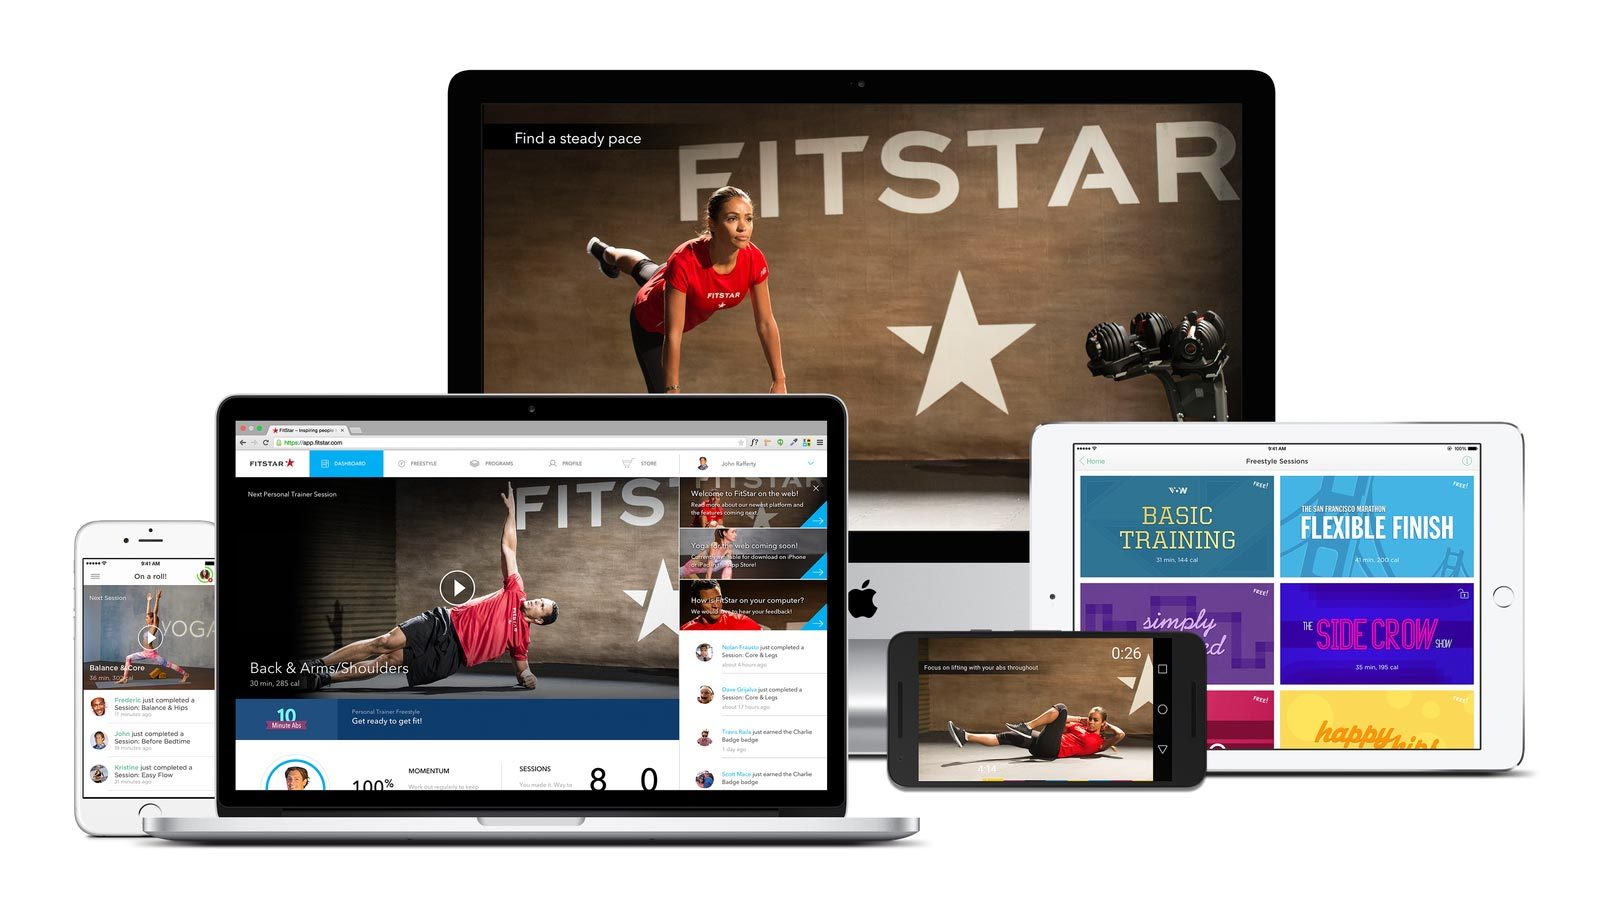 fitstars-standalone-yoga-app-offers-customizable-workouts